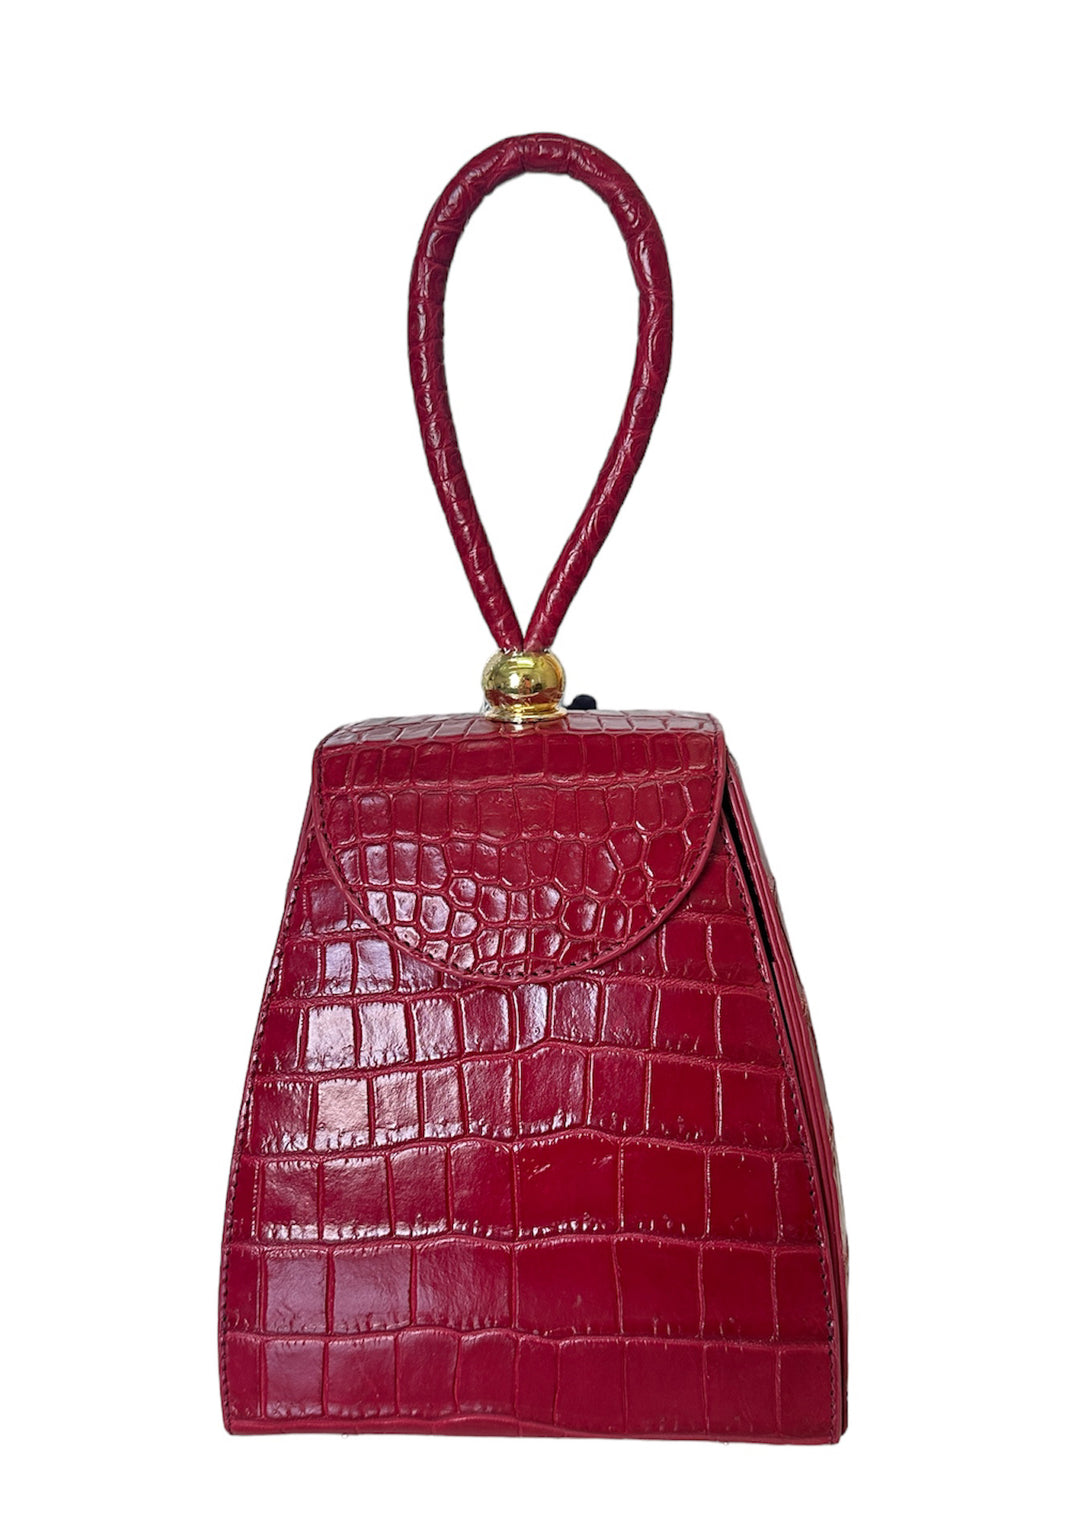 Italy Crocodile Handbag Red